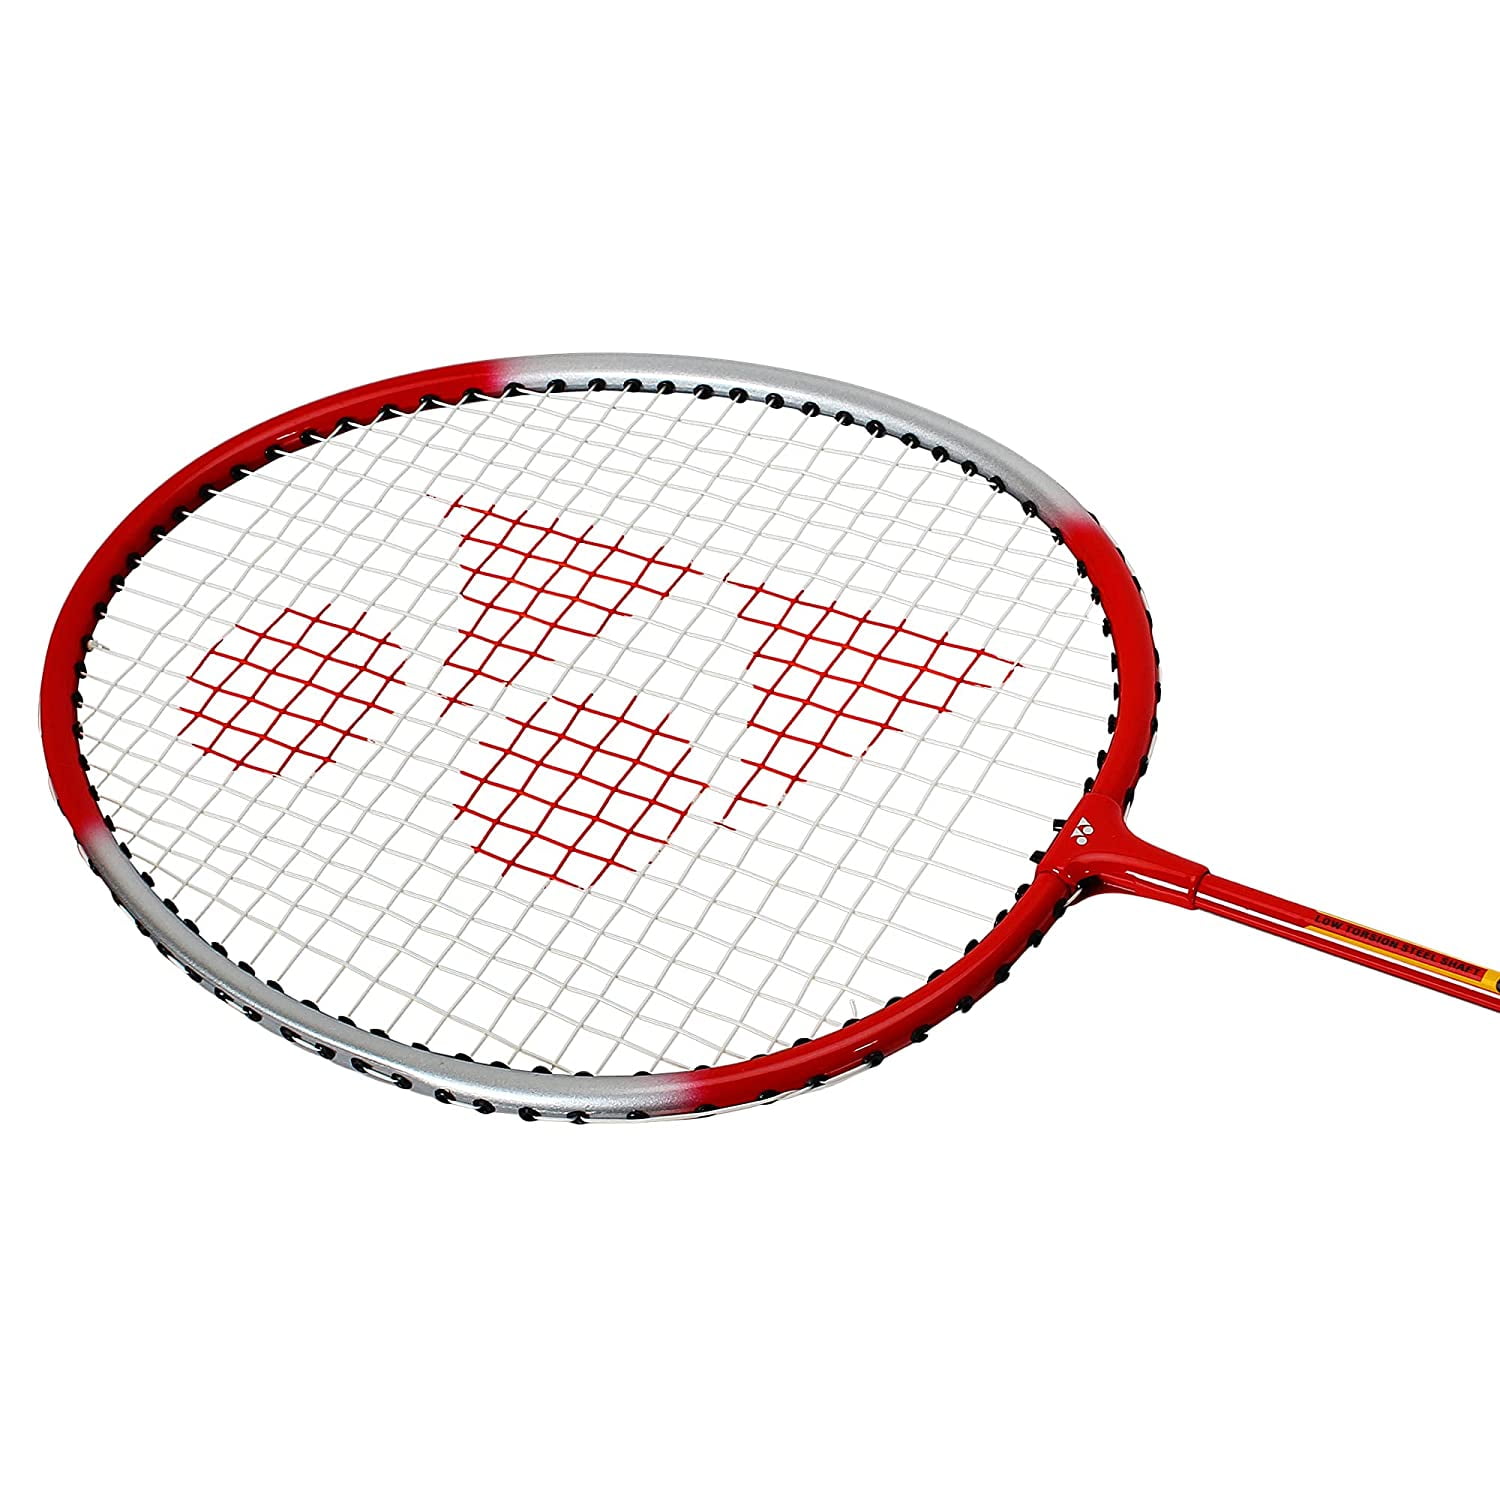 Yonex GR 303 Aluminium Blend Badminton Racquet with Full Cover, Red Set of 2